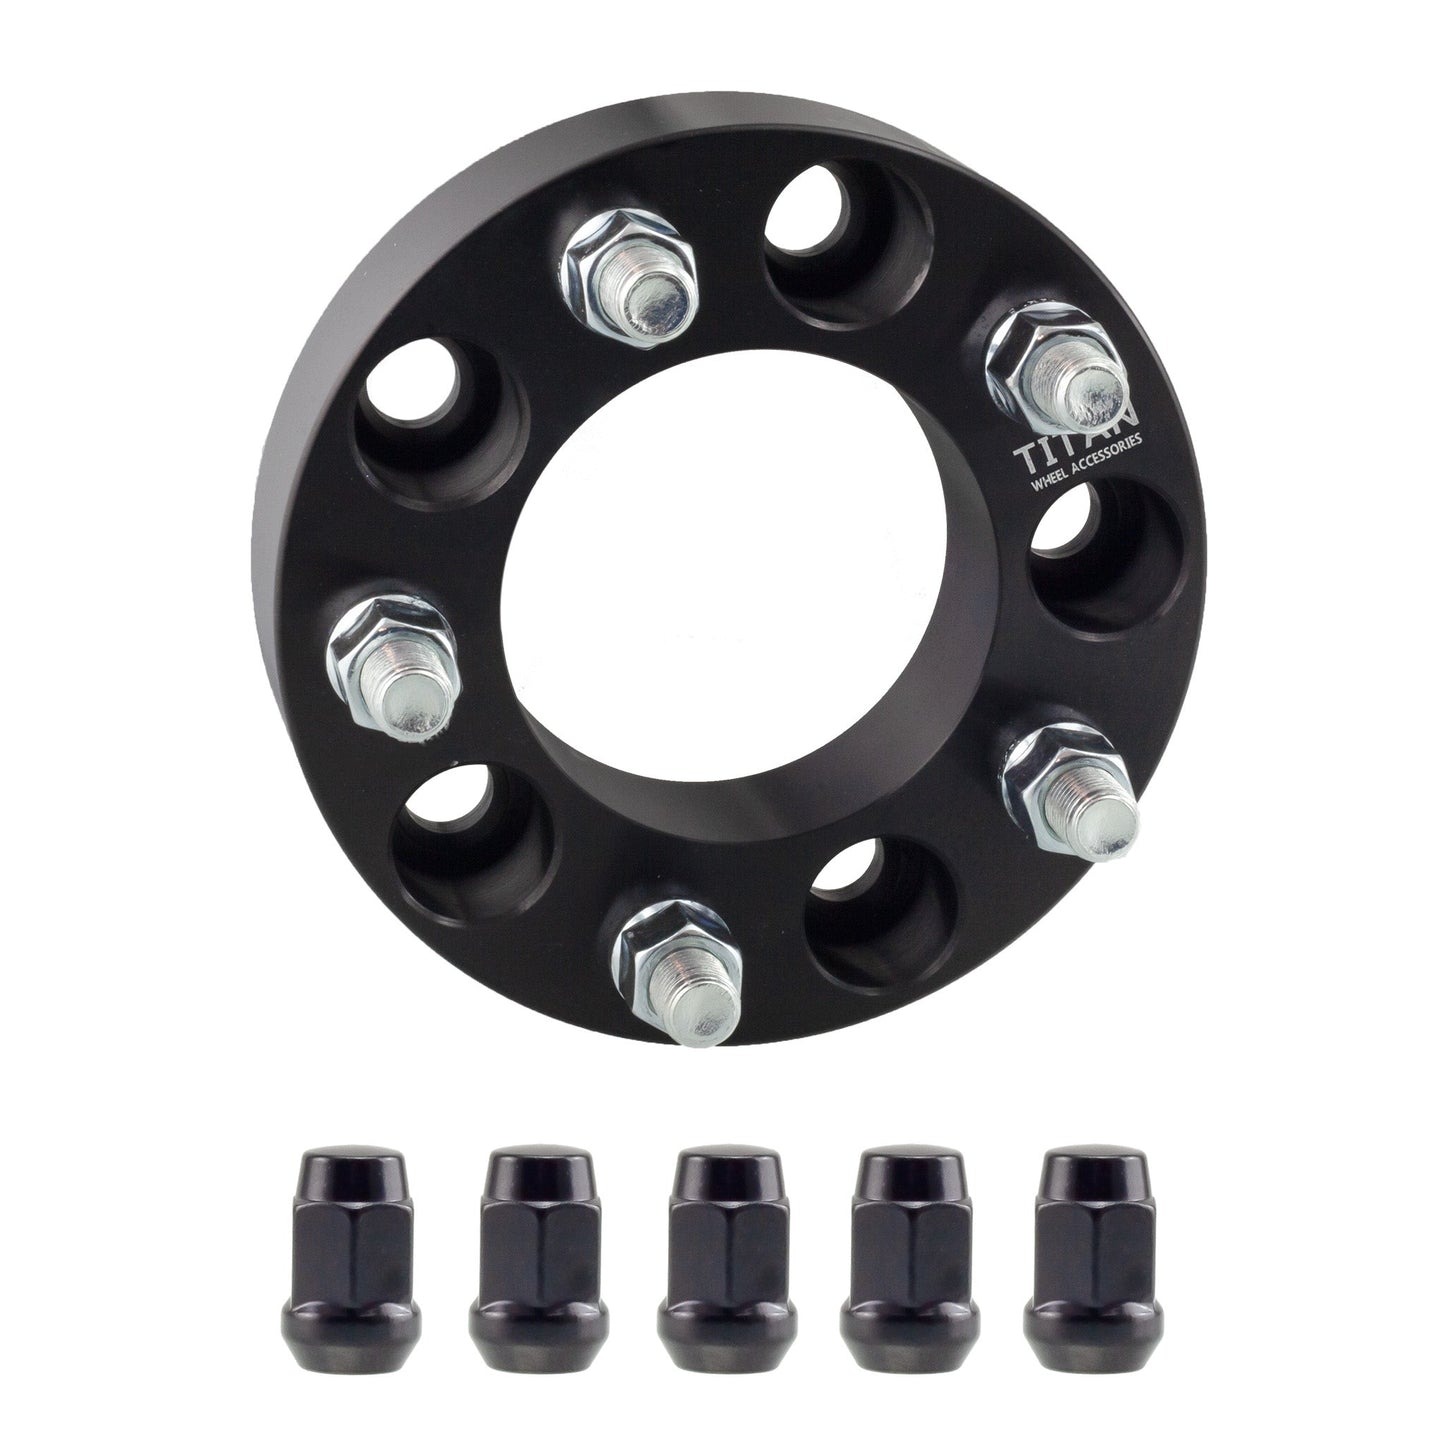 20mm Titan Wheel Spacers for Mazda RX 7 RX 8 Miata MX-5 | 5x114.3 (5x4.5) | 67.1 Hubcentric |12x1.5 Studs | Titan Wheel Accessories